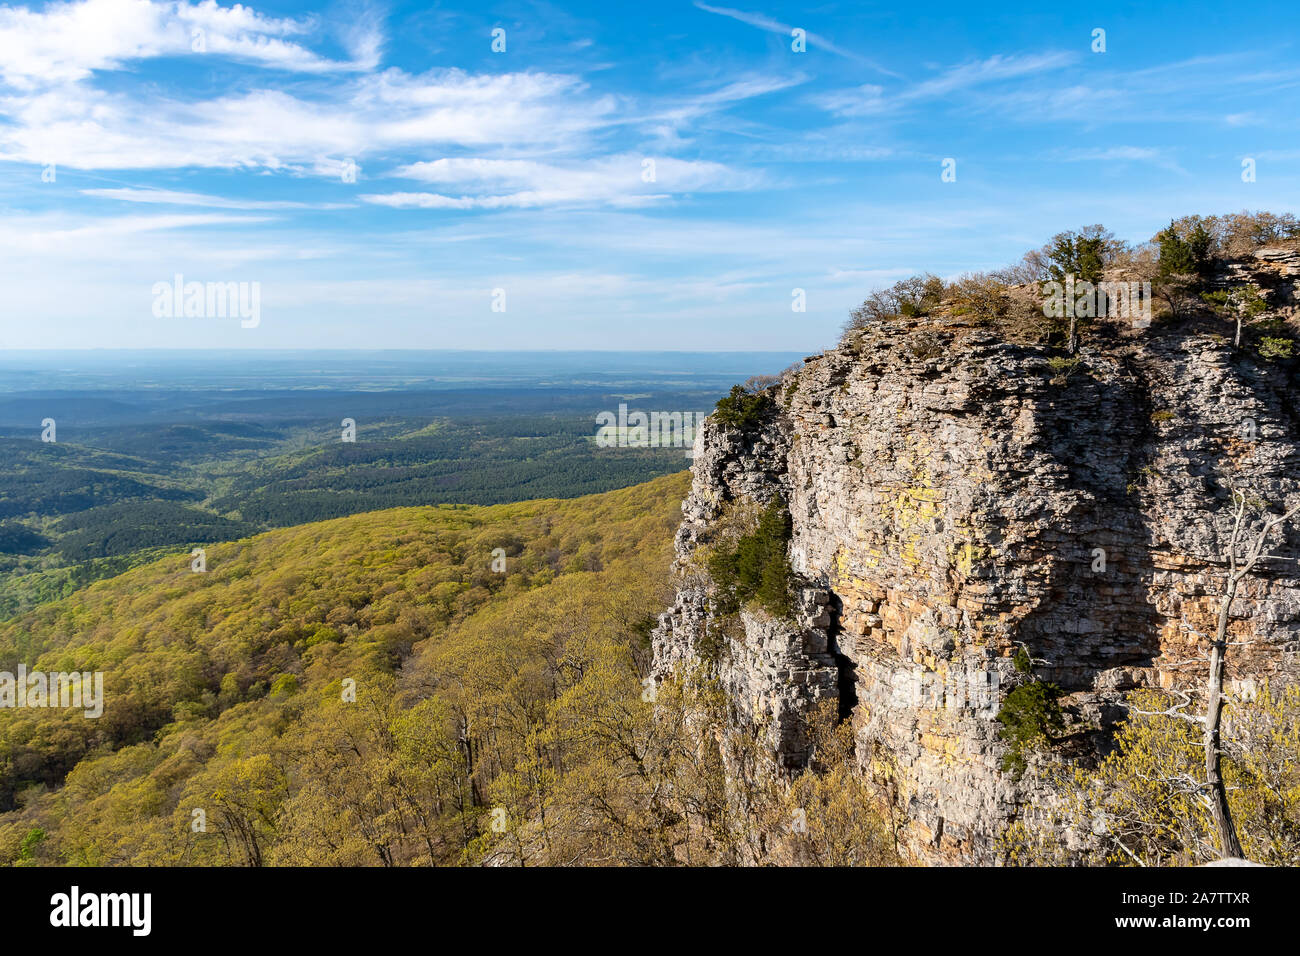 Cliff view in the Ozark mountains, Arkansas Stock Photo